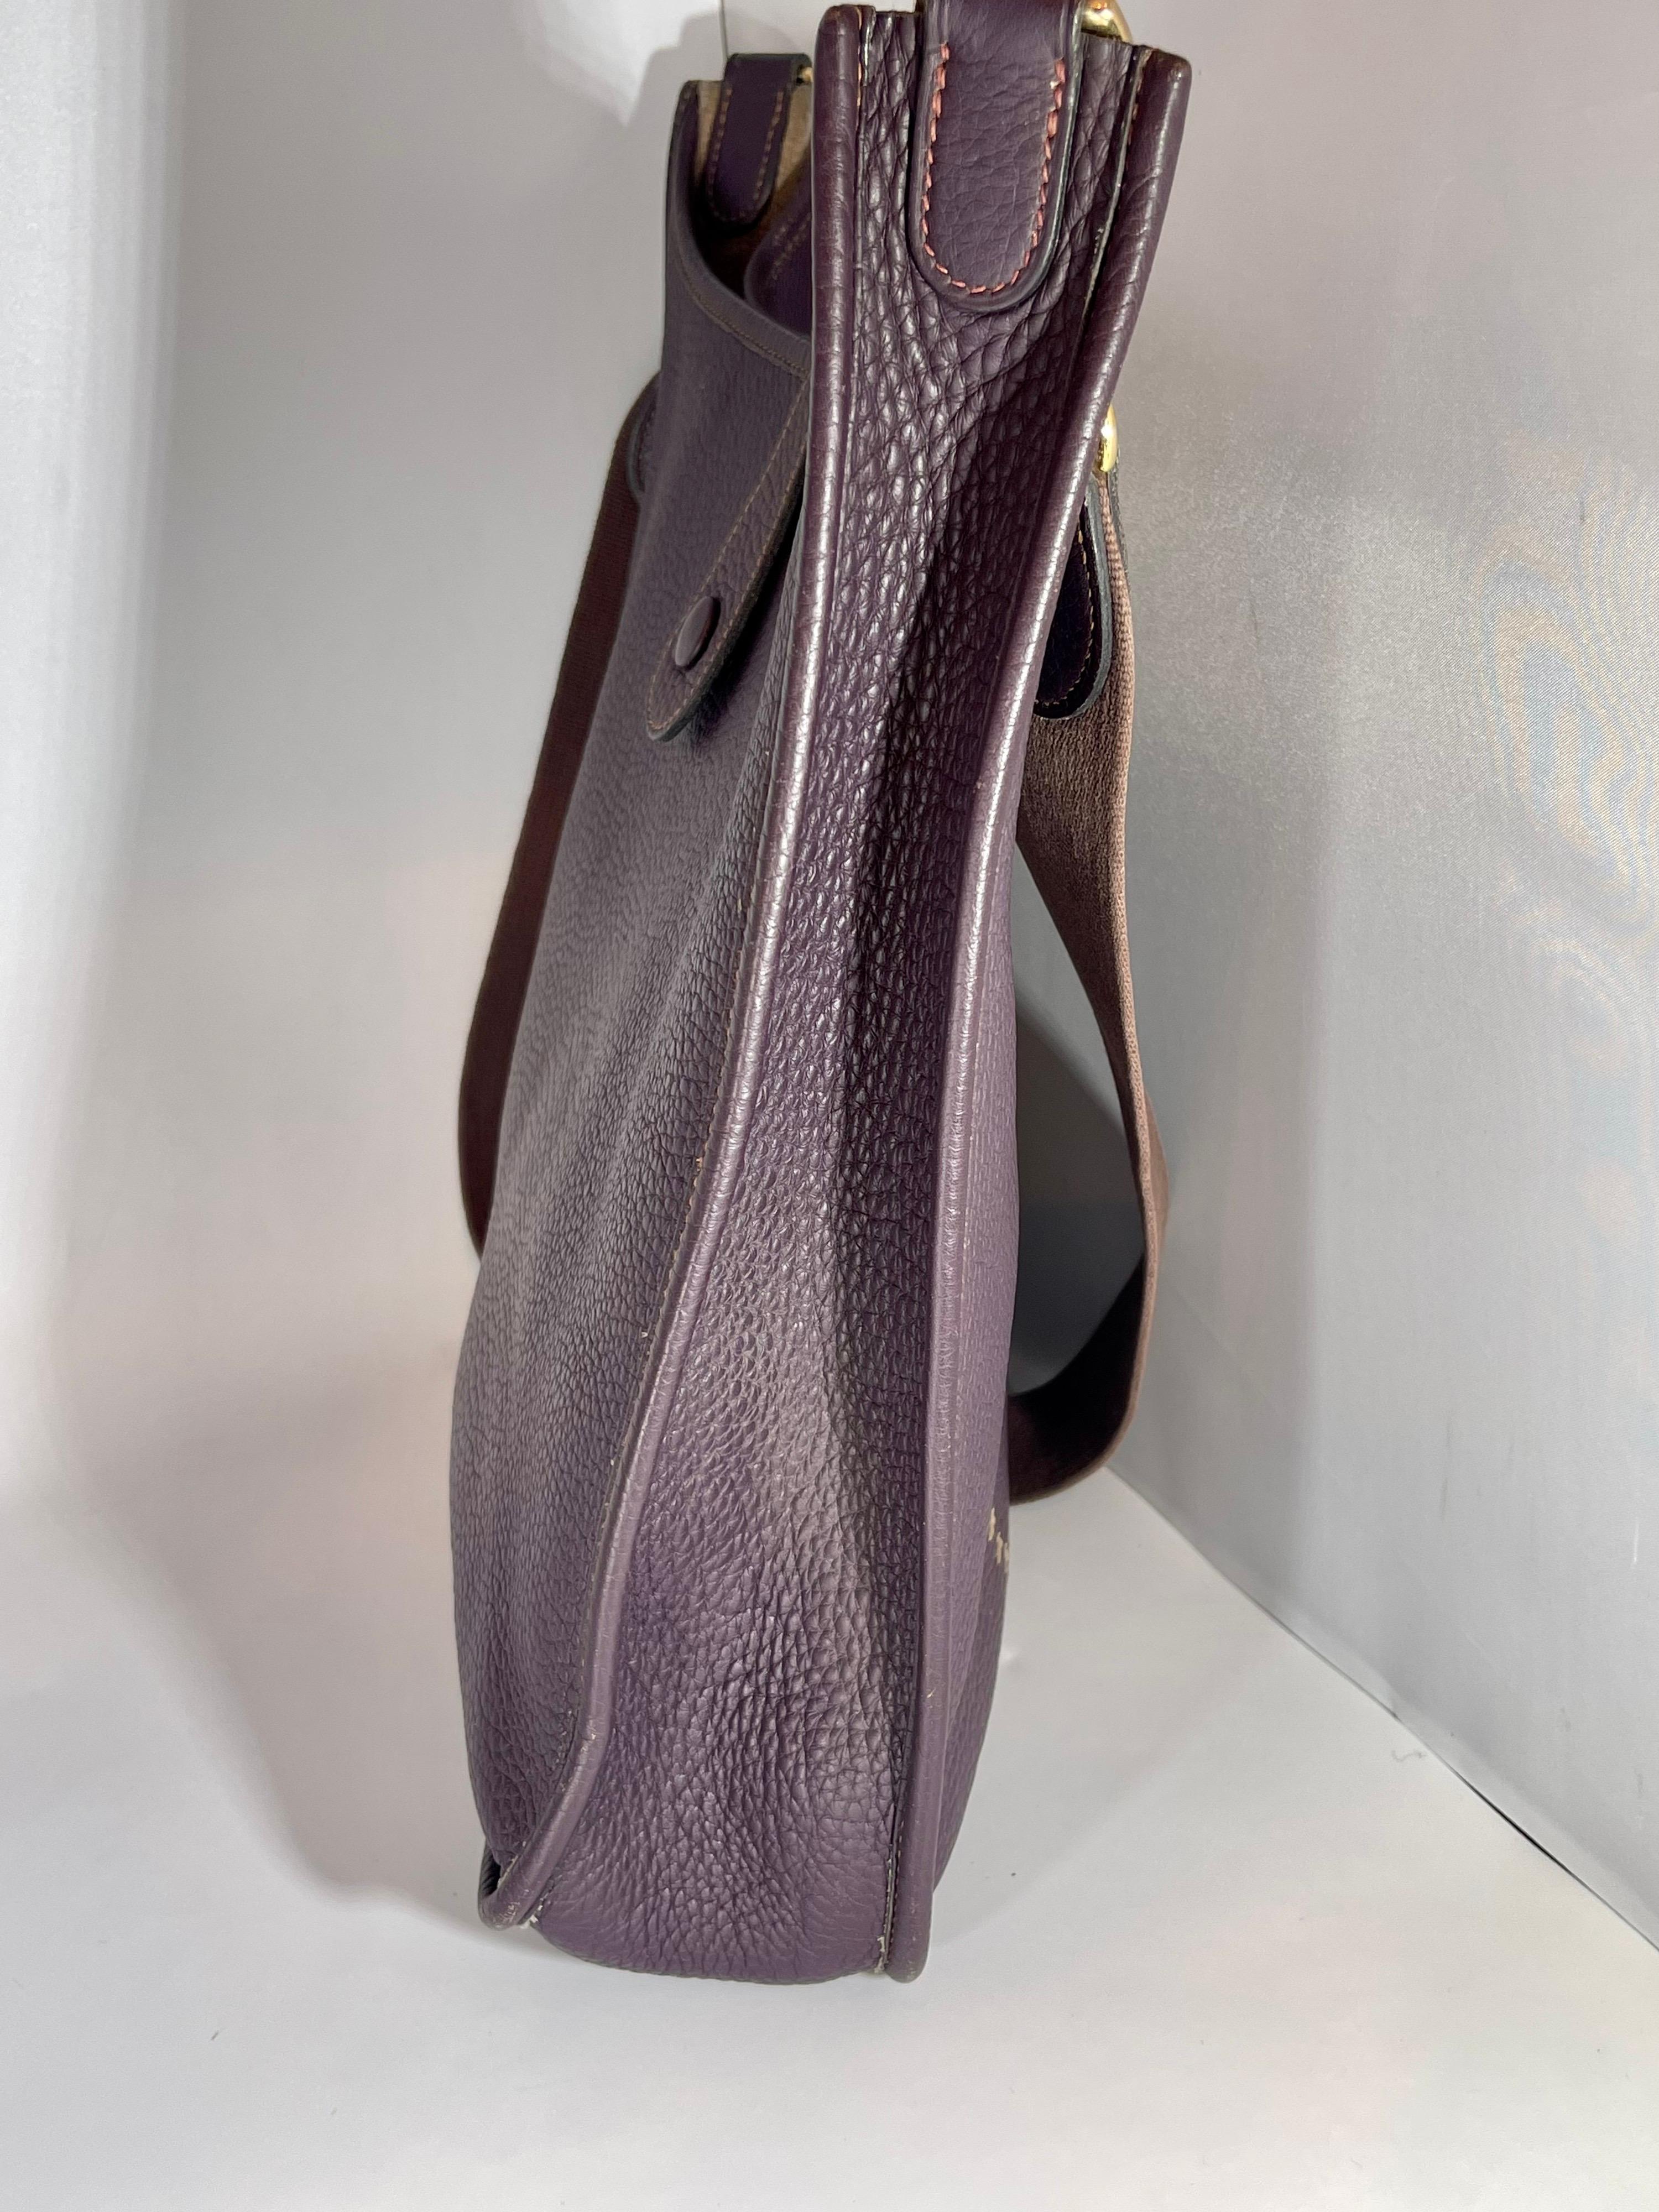 Hermès Evelyne Pm Dunkelbraun / Schokolade Leder Cross Body Bag wie neu im Angebot 3